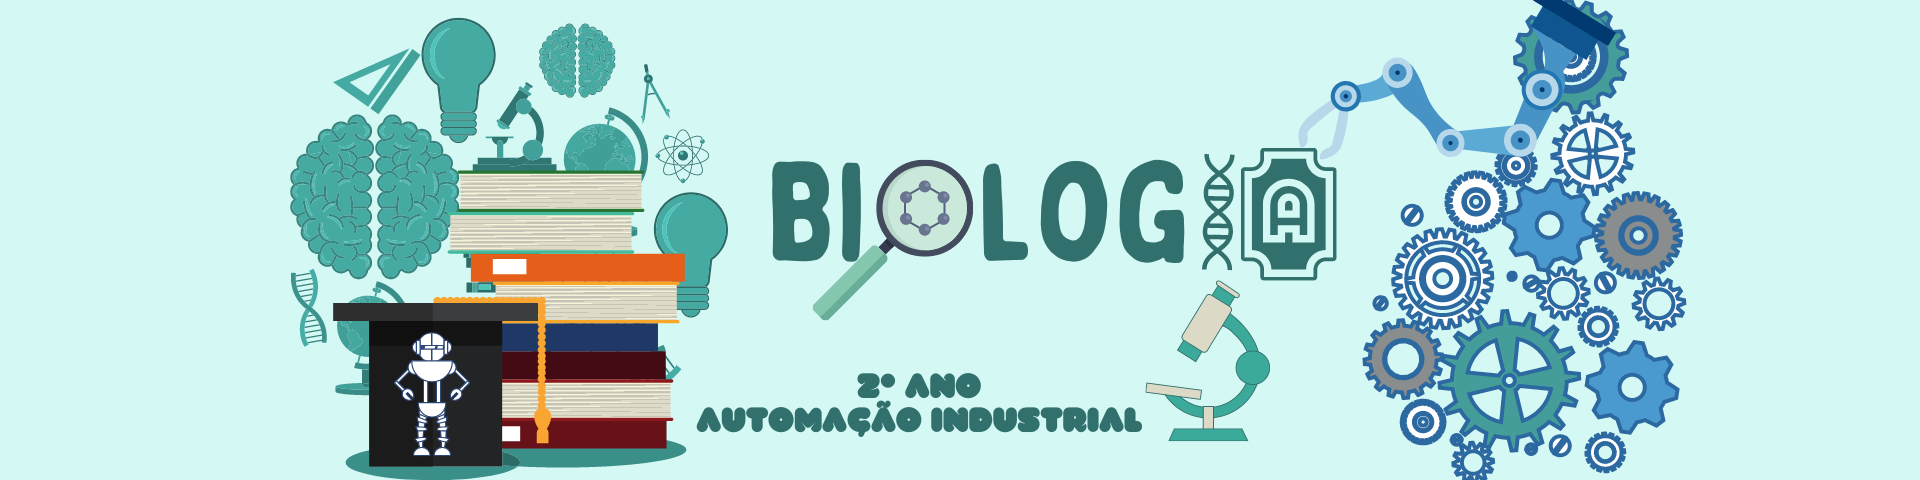 Biologia 2 - Automação Industrial